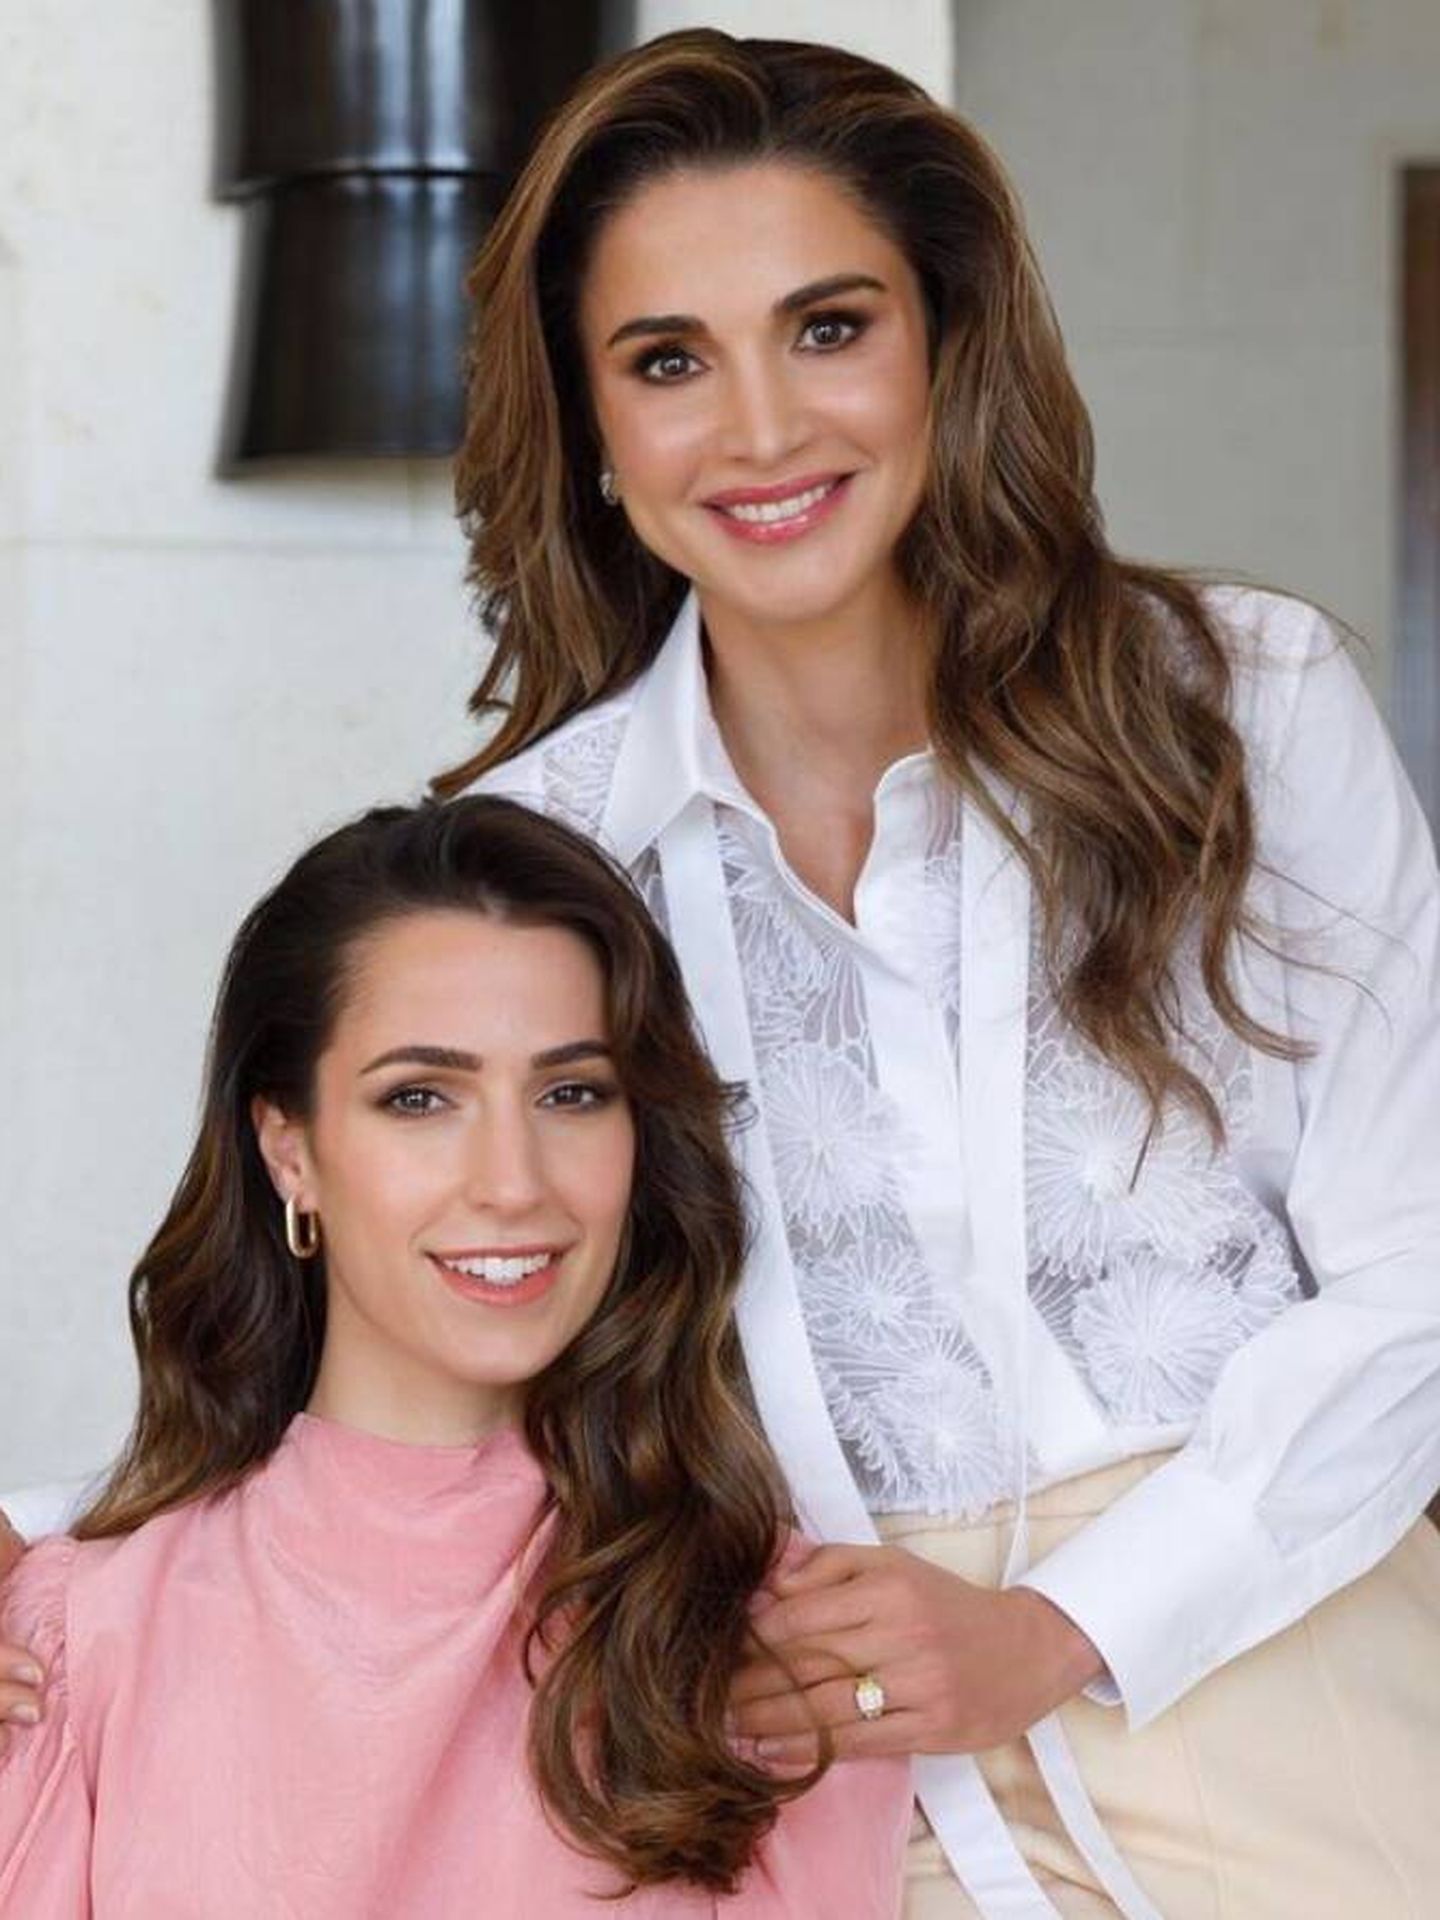 Rajwa al Saif junto a su suegra, la reina Rania. (Instagram)